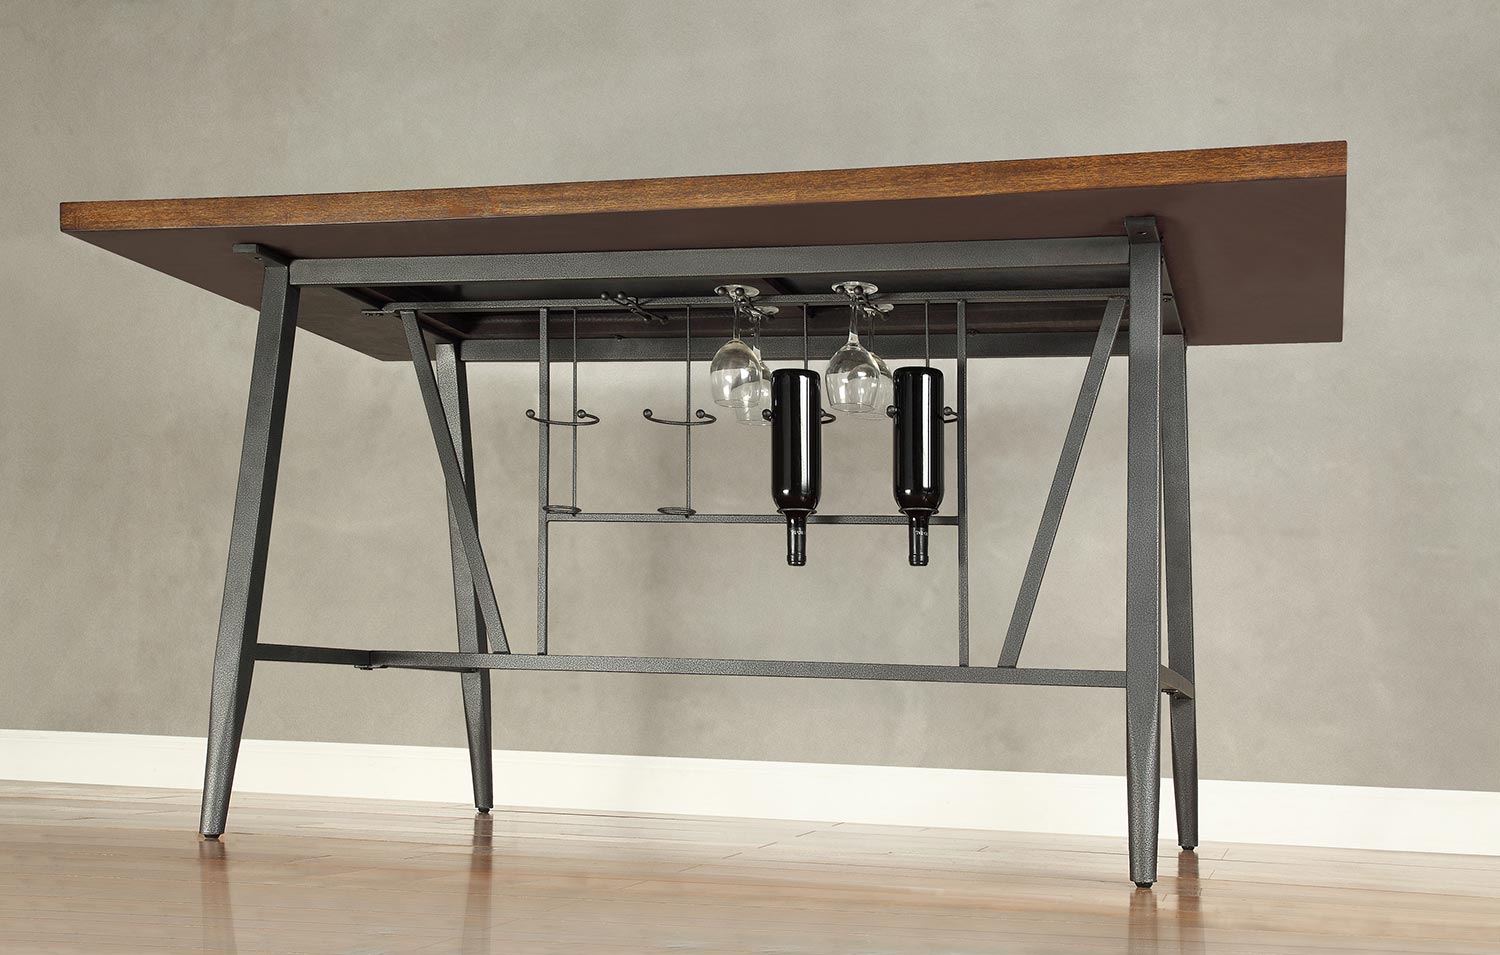 Homelegance Selbyville Rectangular Counter Height Table with Glass Insert - Cherry/Gunmetal